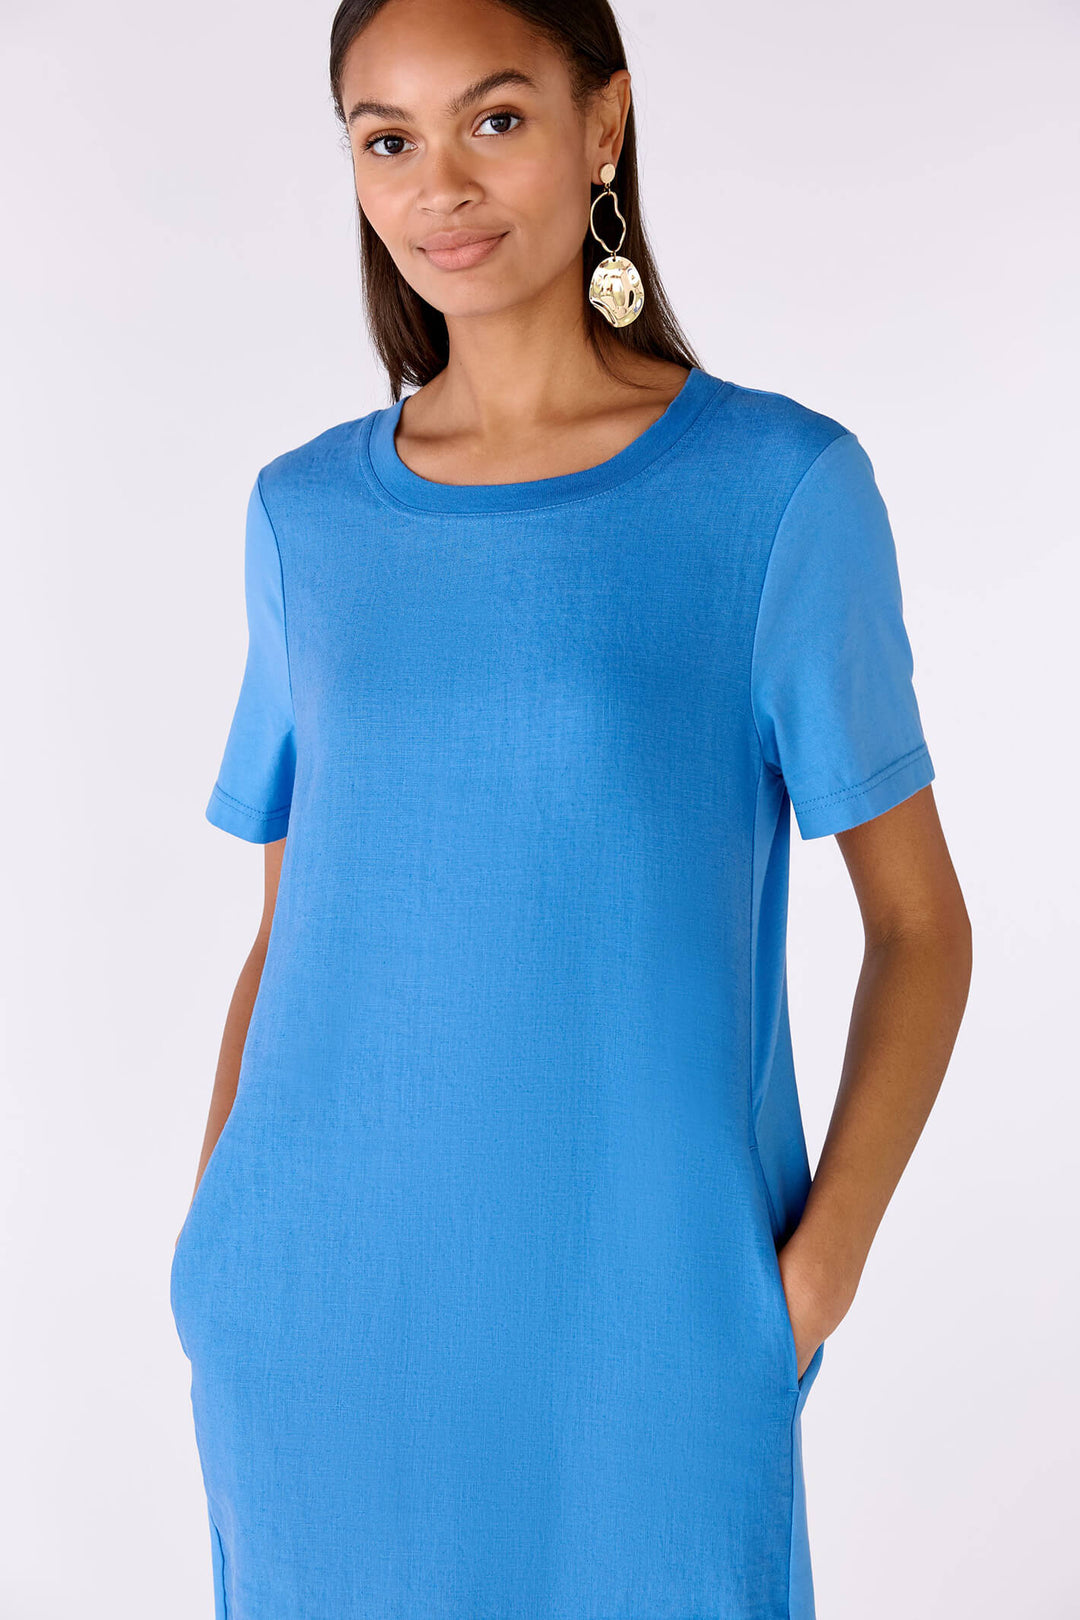 Oui 78504 Blue Linen & Cotton Short Sleeve Dress - Shirley Allum Boutique